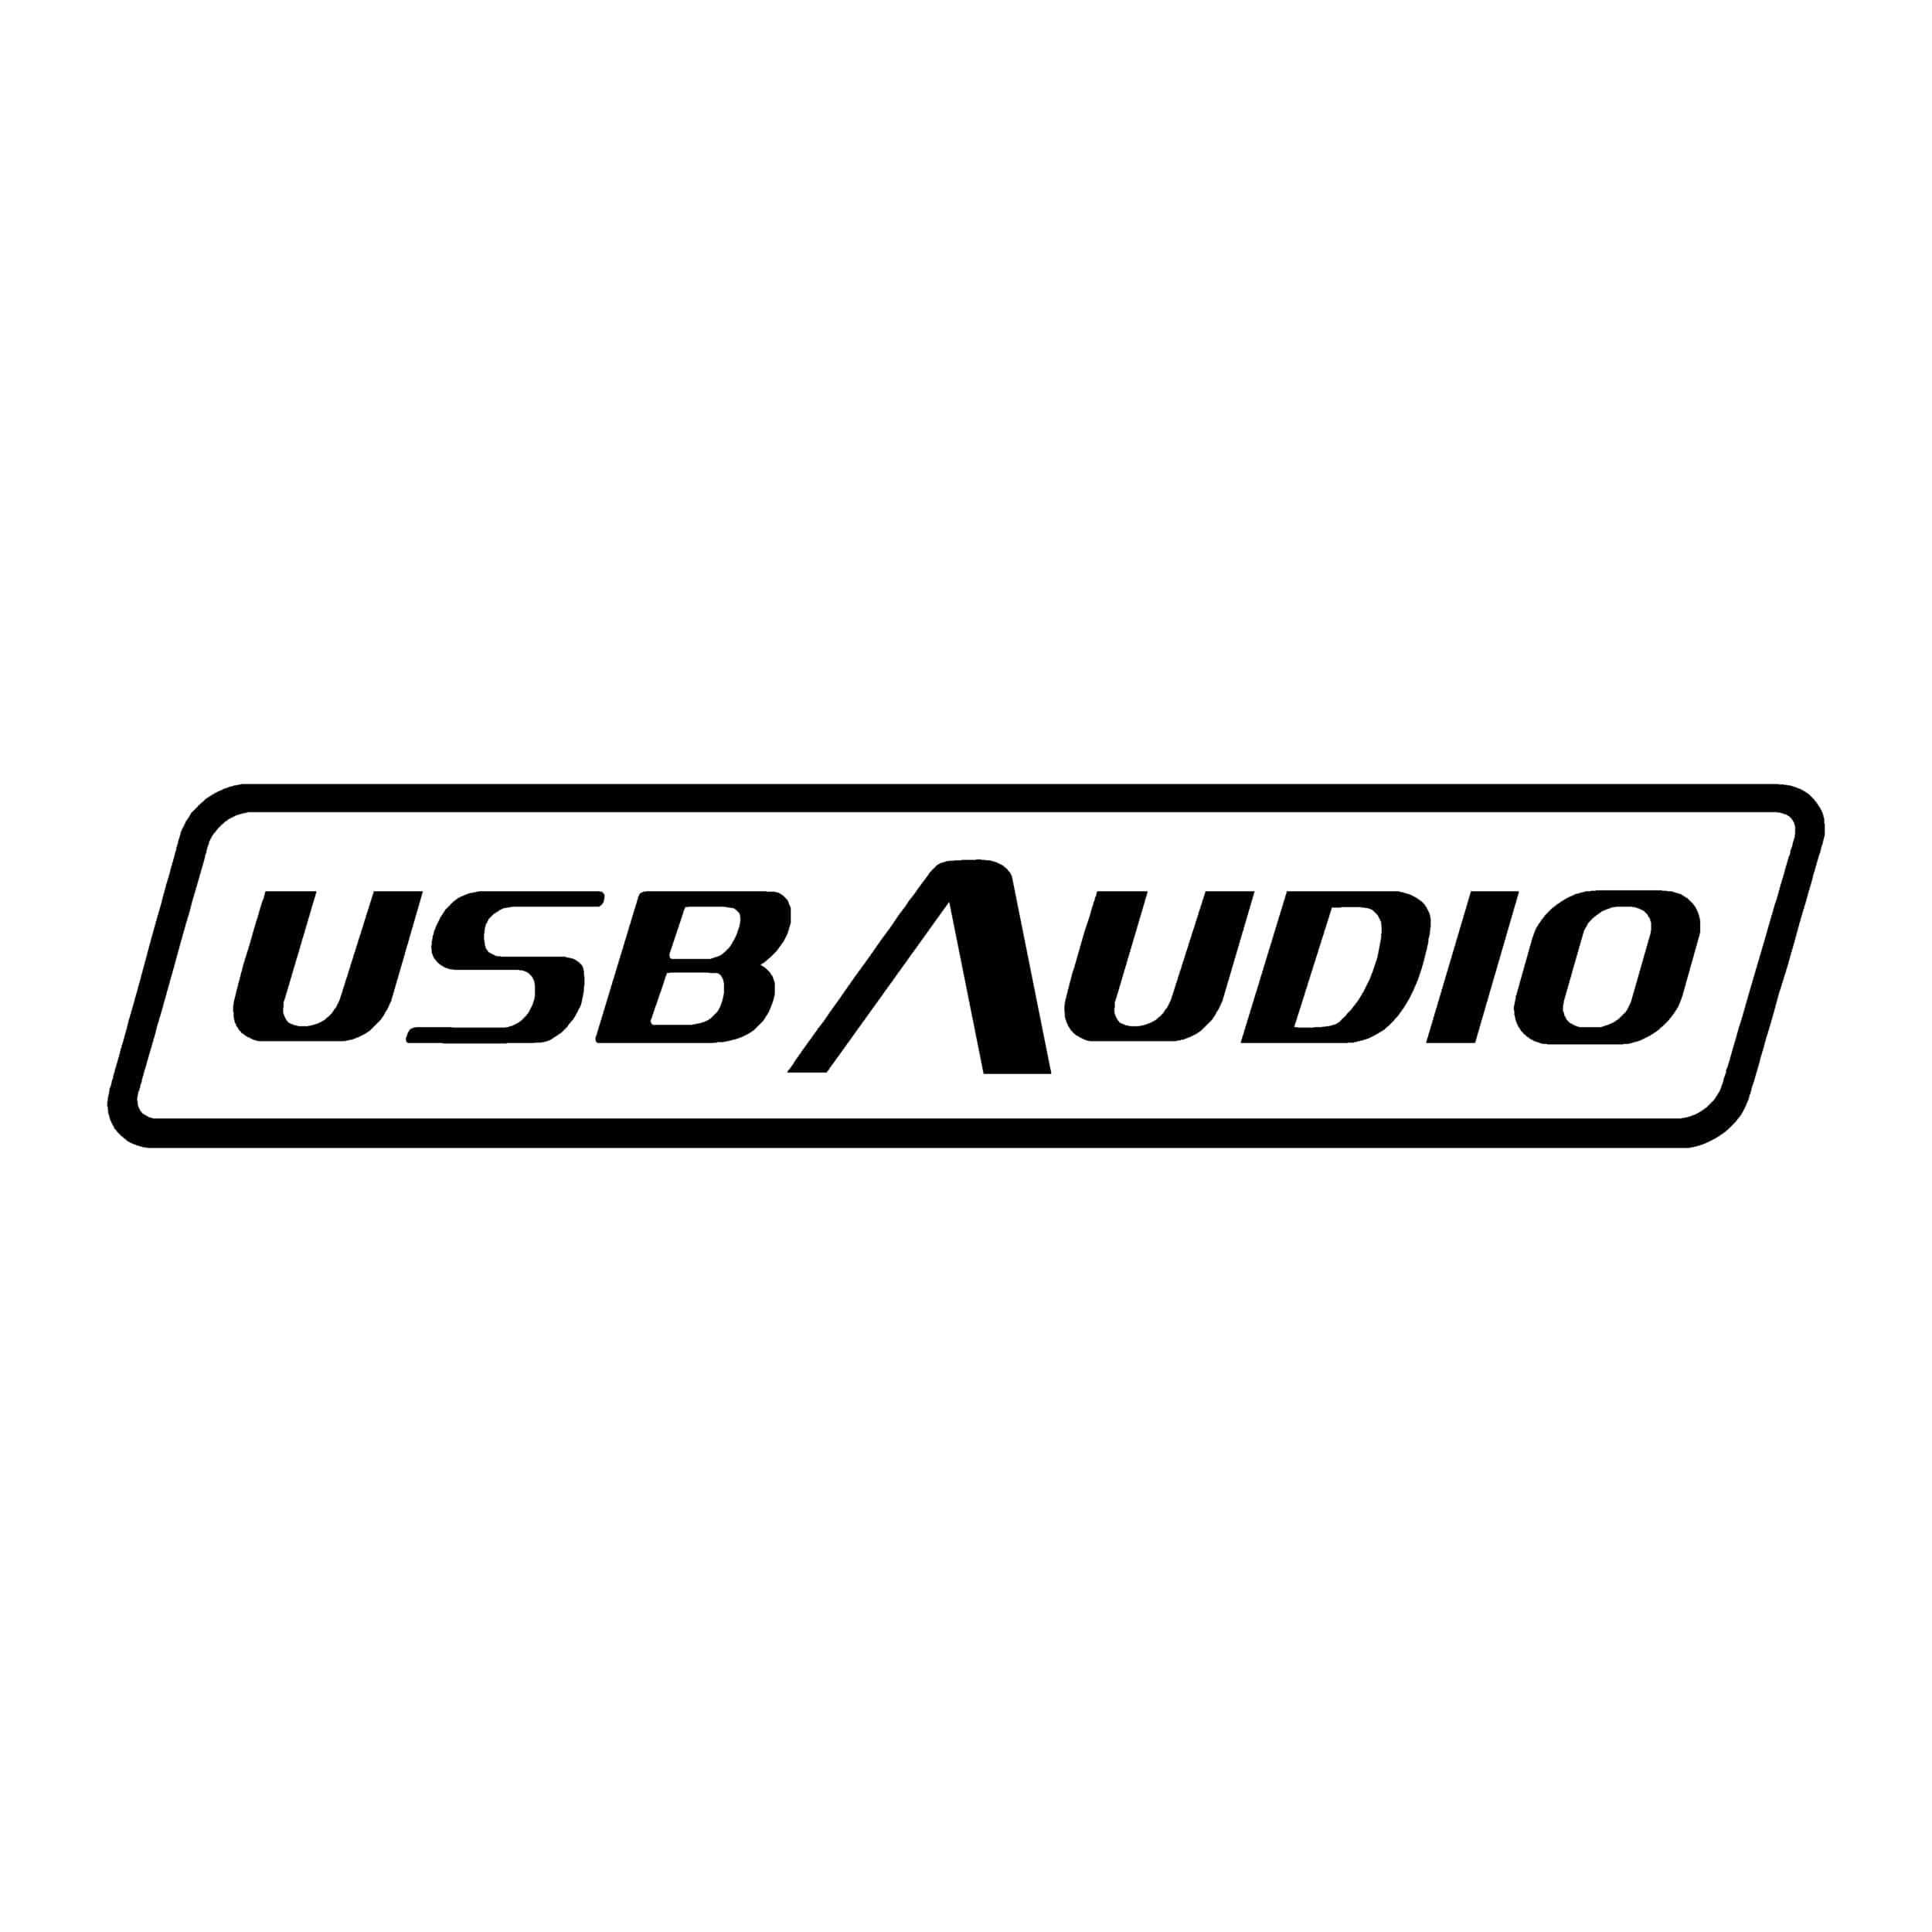 sticker-usb-audio-ref-1-tuning-audio-sonorisation-car-auto-moto-camion-competition-deco-rallye-autocollant-min